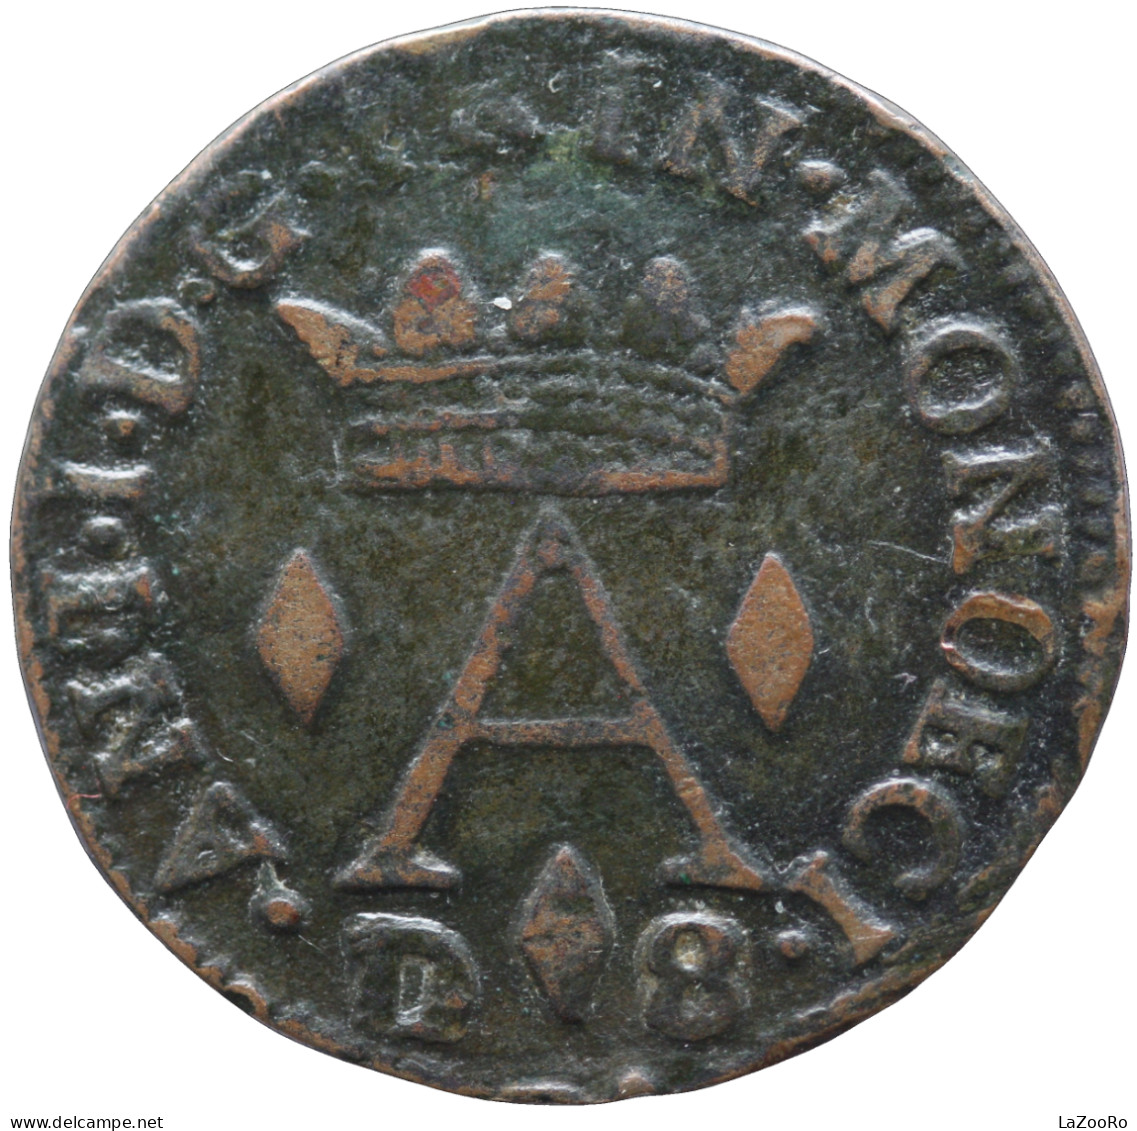 LaZooRo: Monaco 8 Deniers 1720 VF / XF Very Rare - 1505-1795 From Lucien Ier To Honoré III